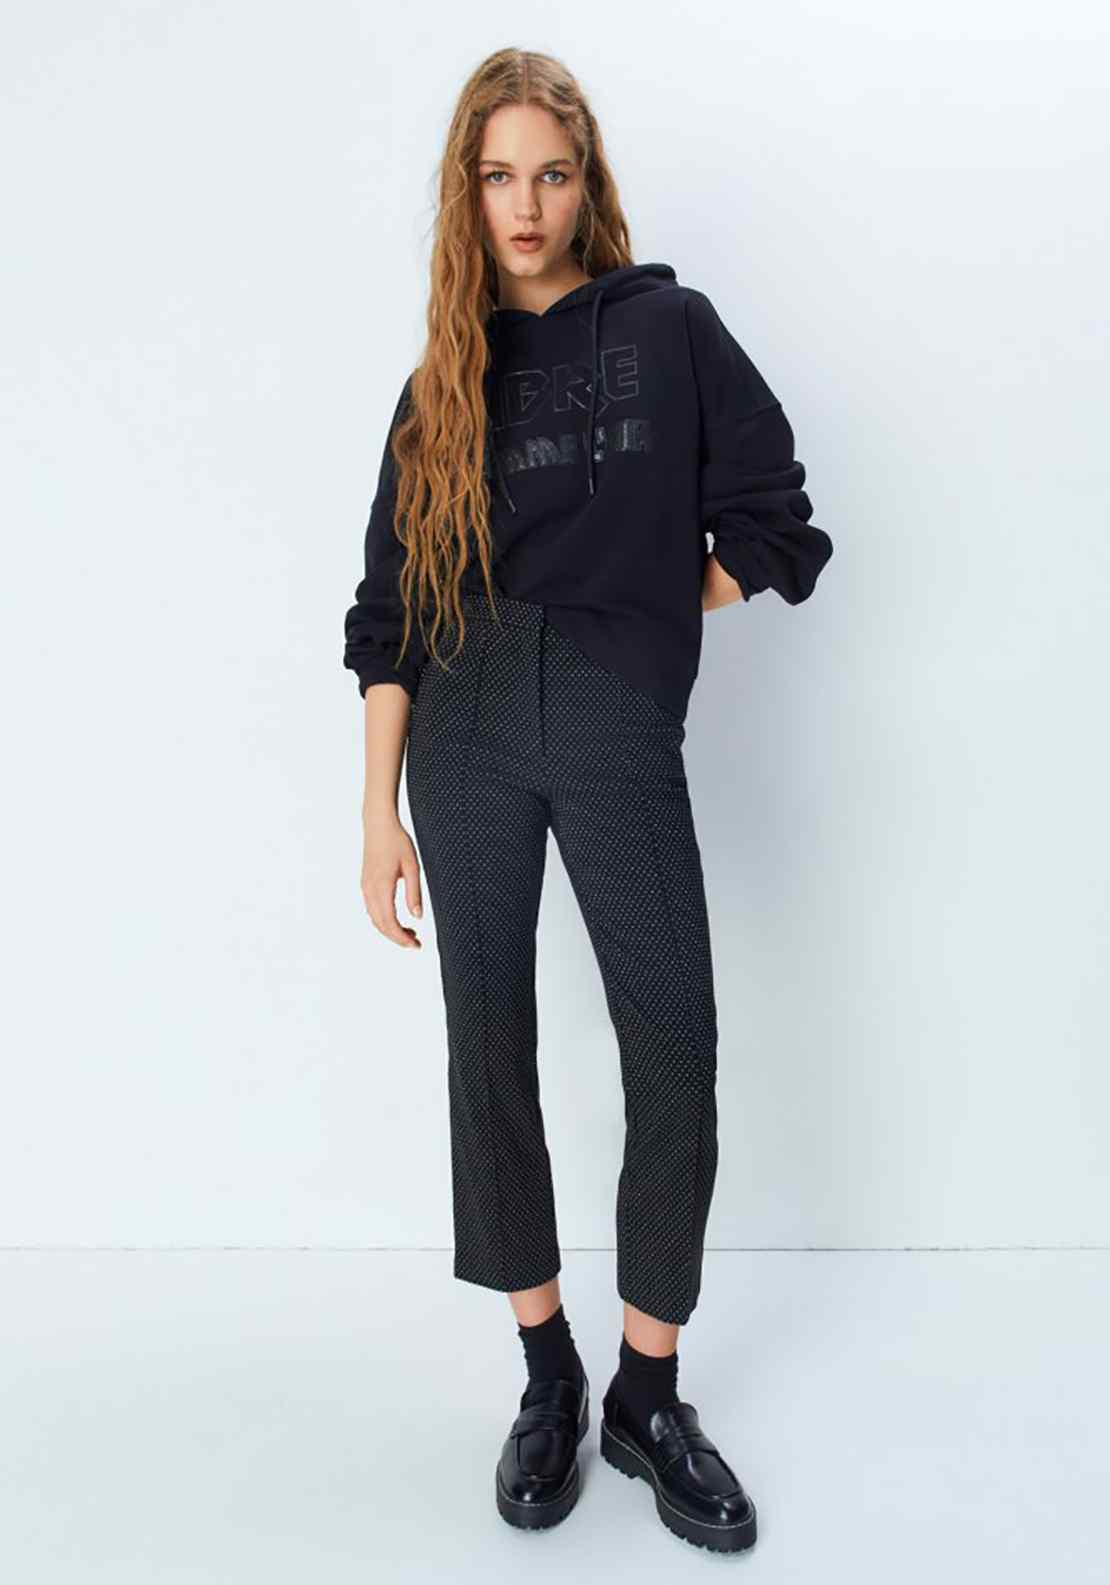 Sfera Jacquard Trousers - Black 1 Shaws Department Stores